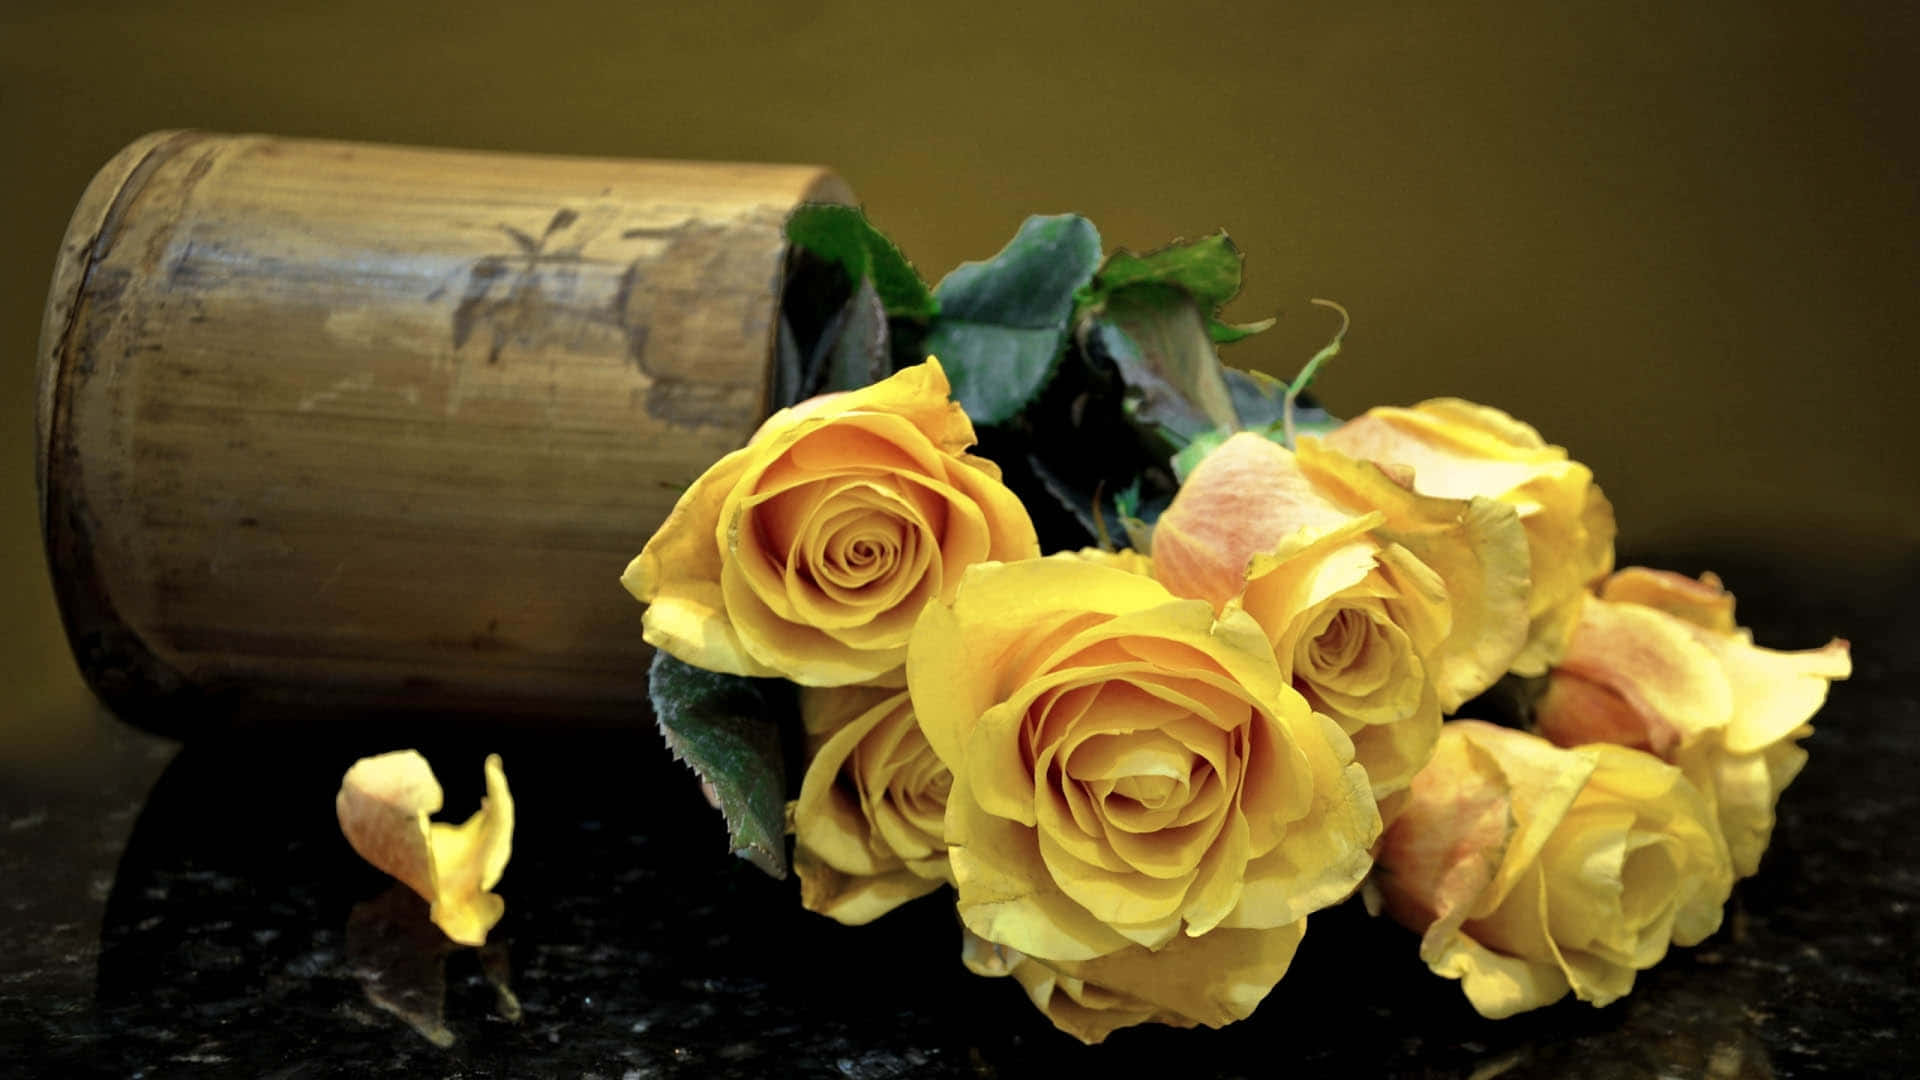 1440pfallen Yellow Roses Bakgrund.